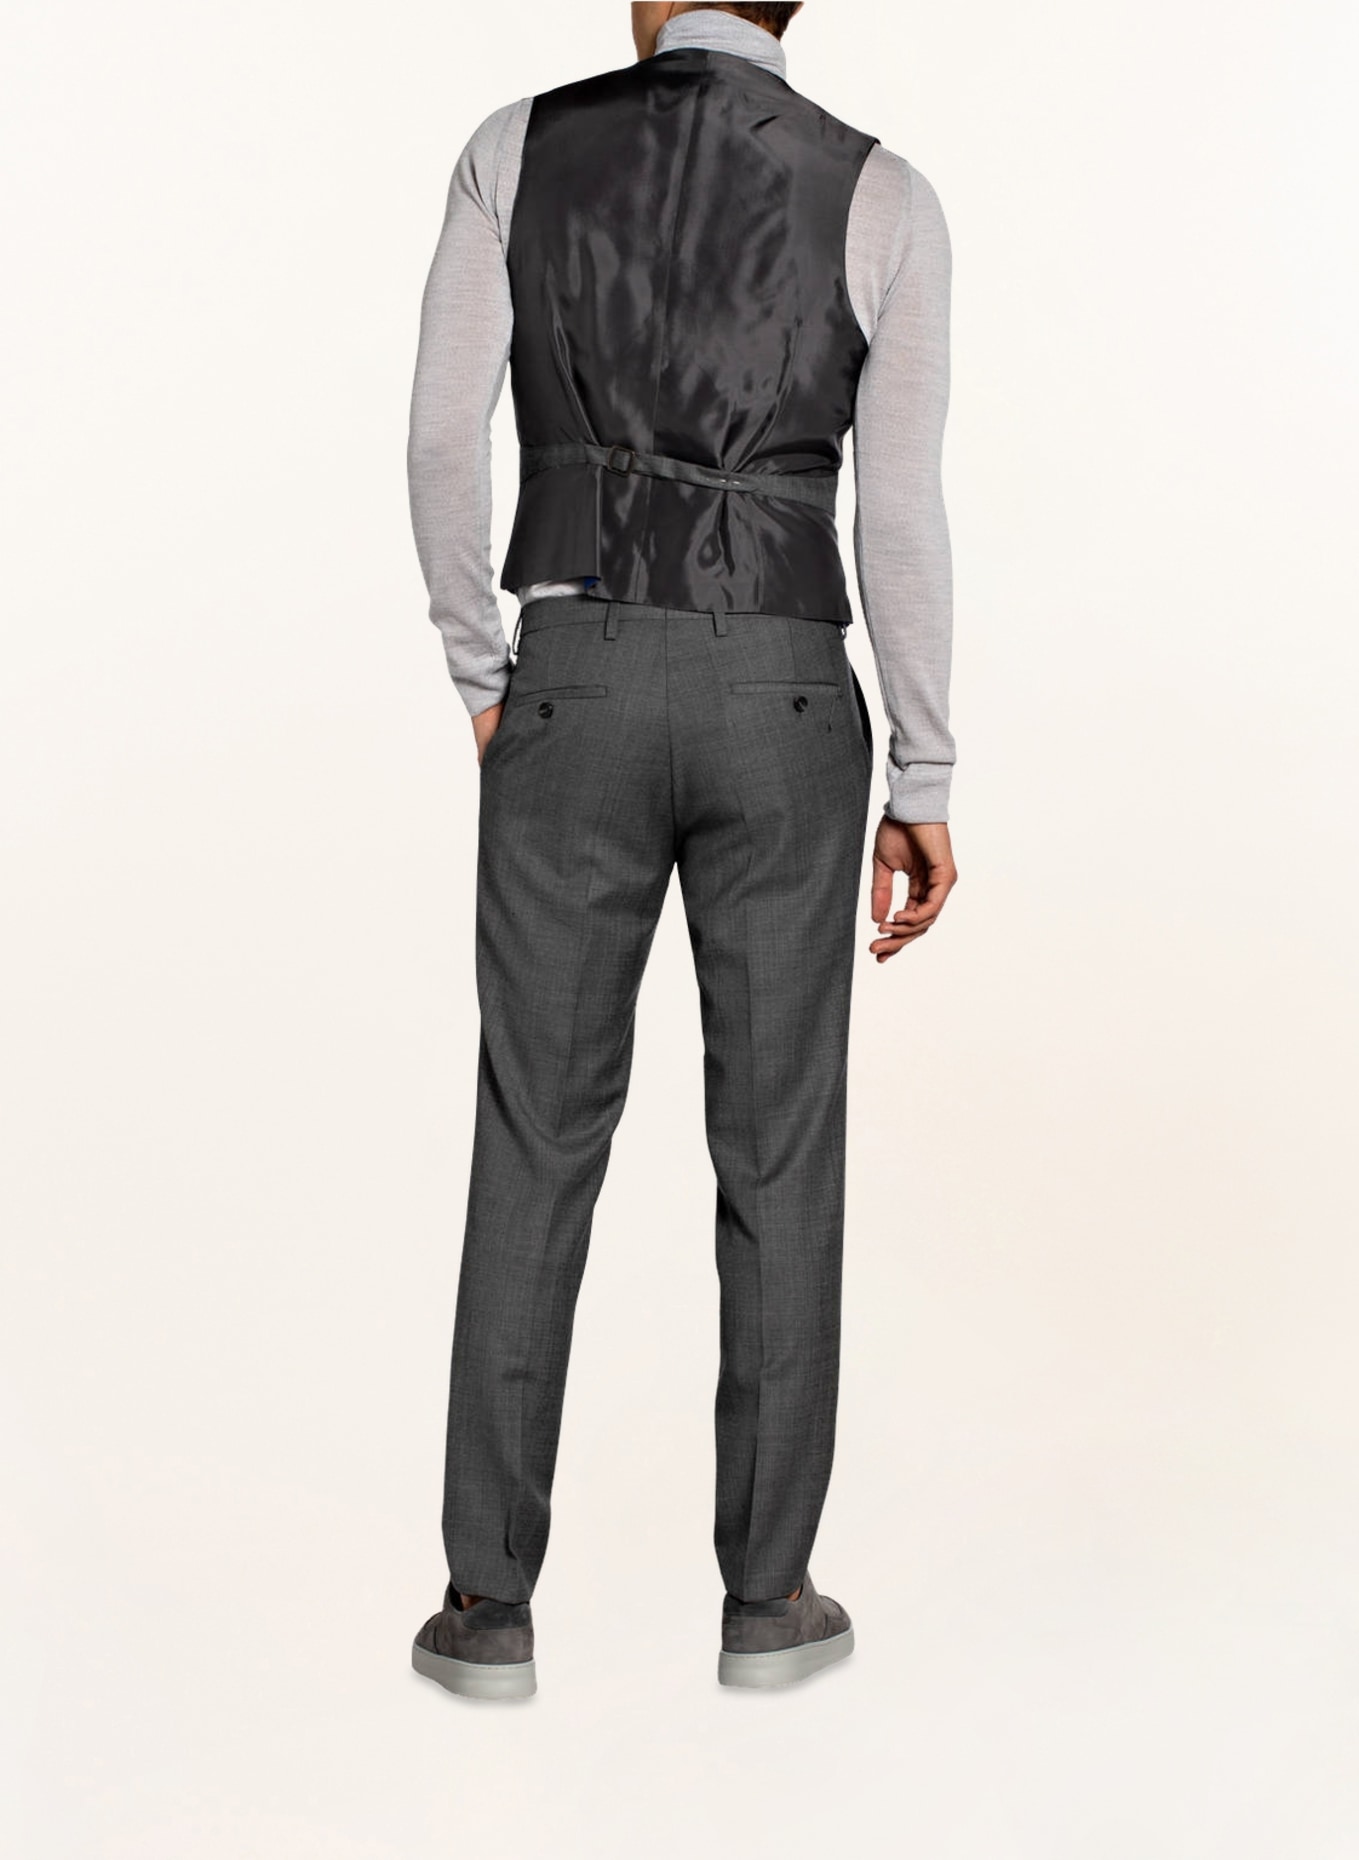 CG - CLUB of GENTS Suit jacket CURT slim fit, Color: 81 grau hell (Image 4)